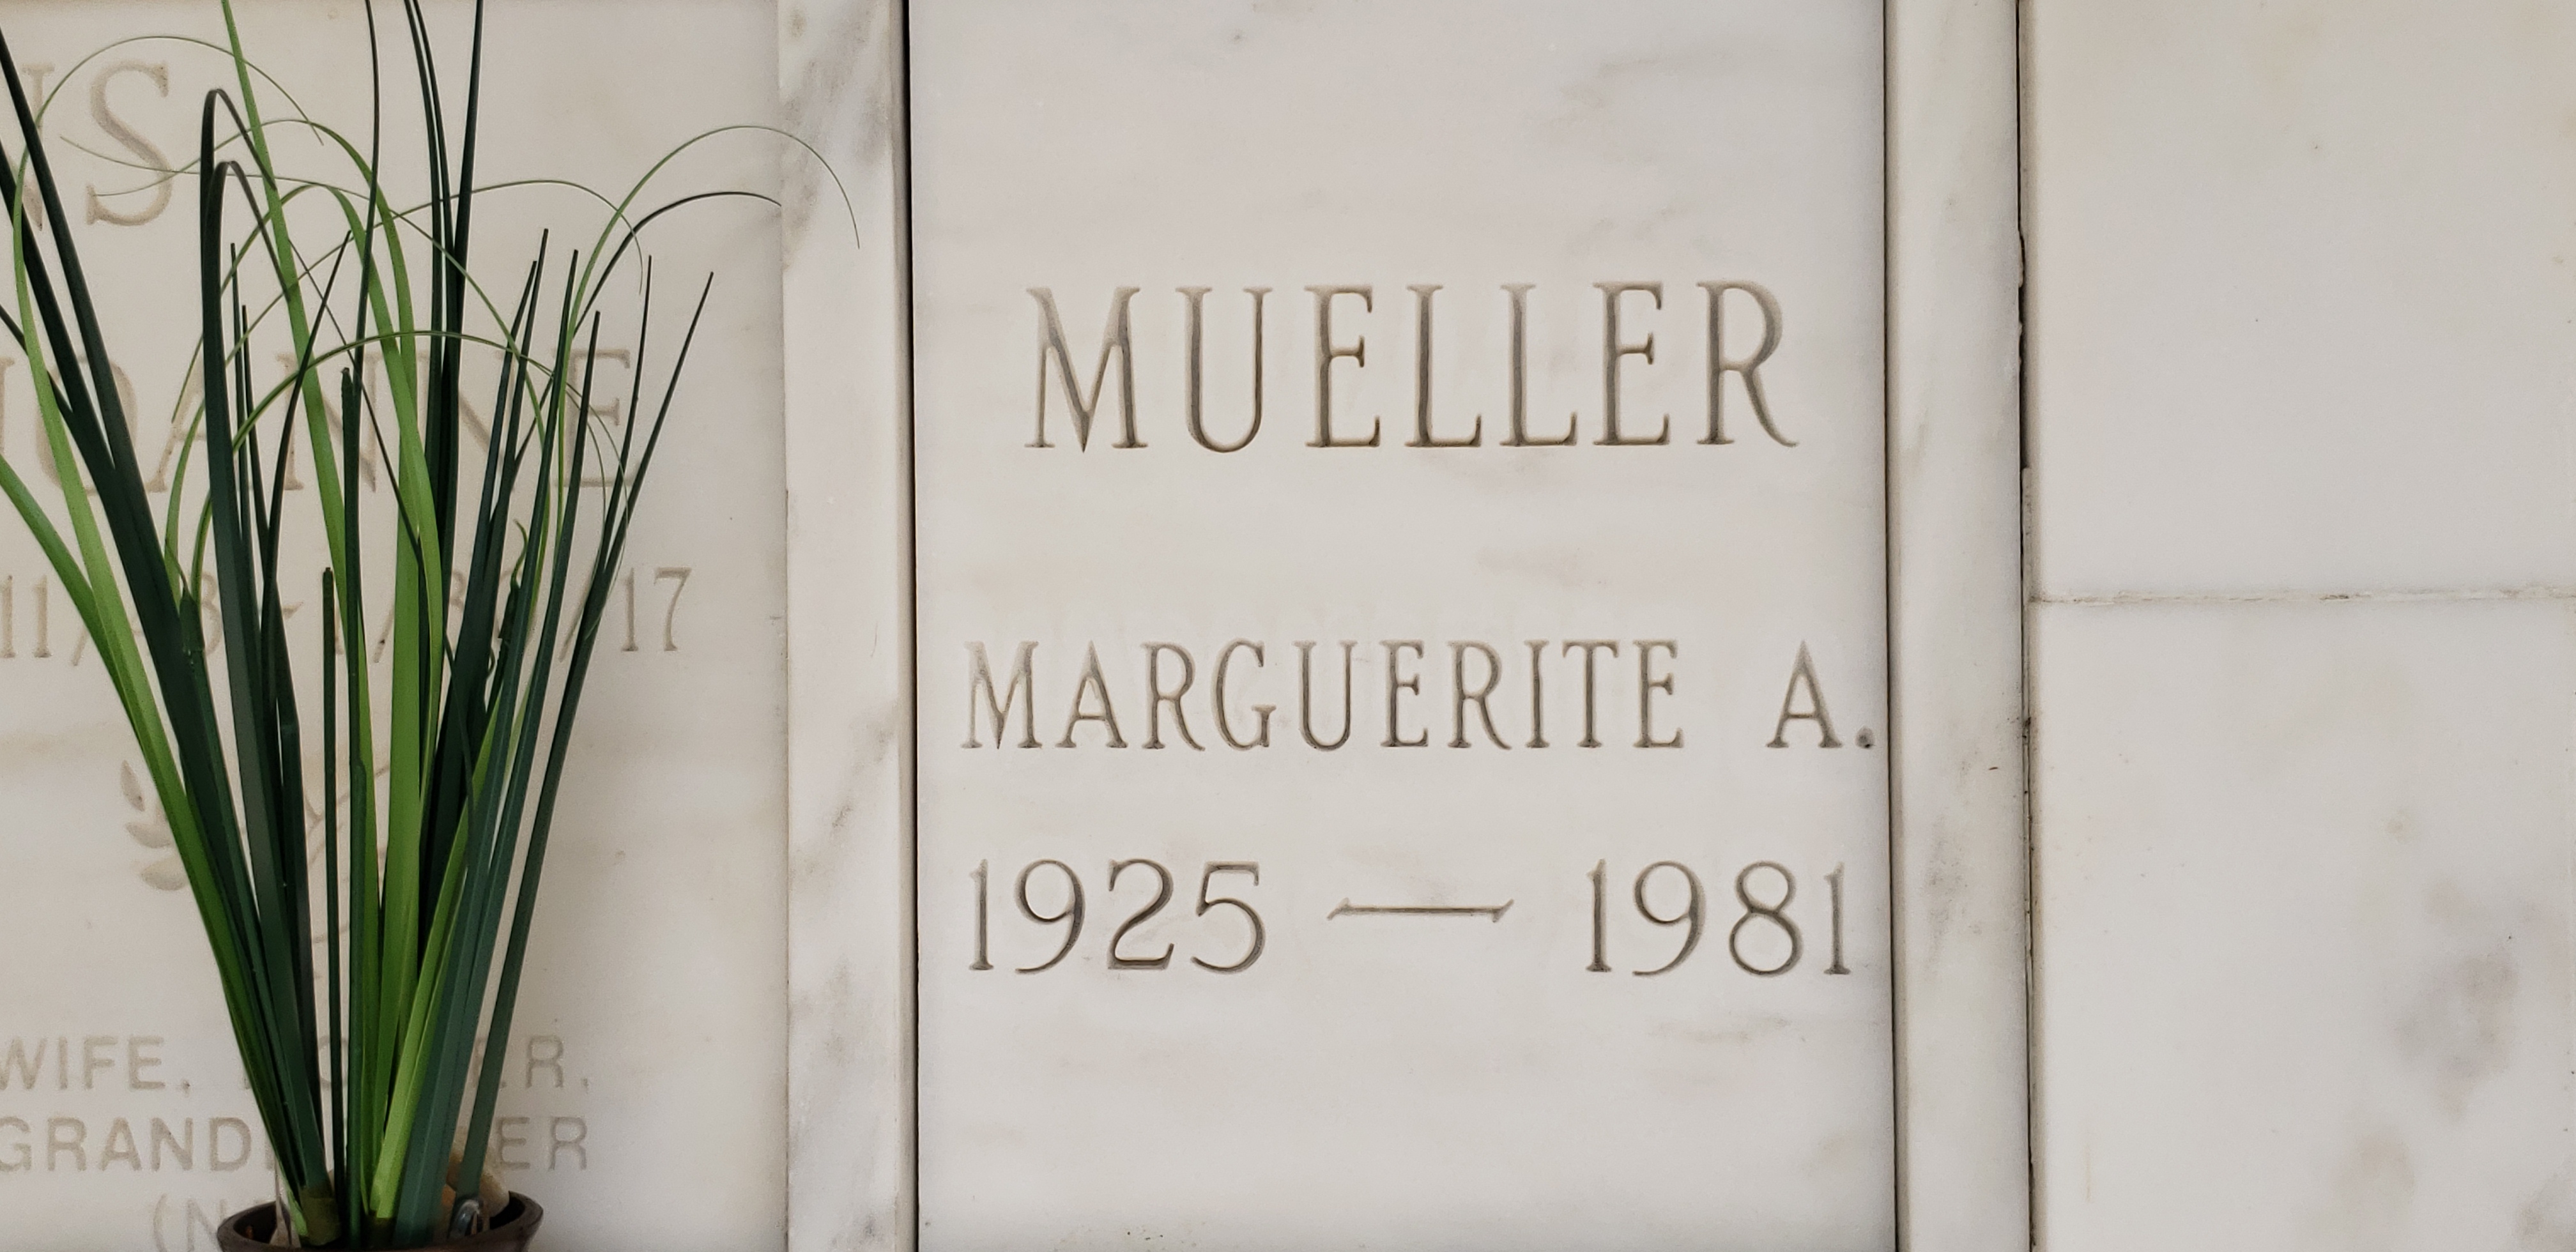 Marguerite A Mueller